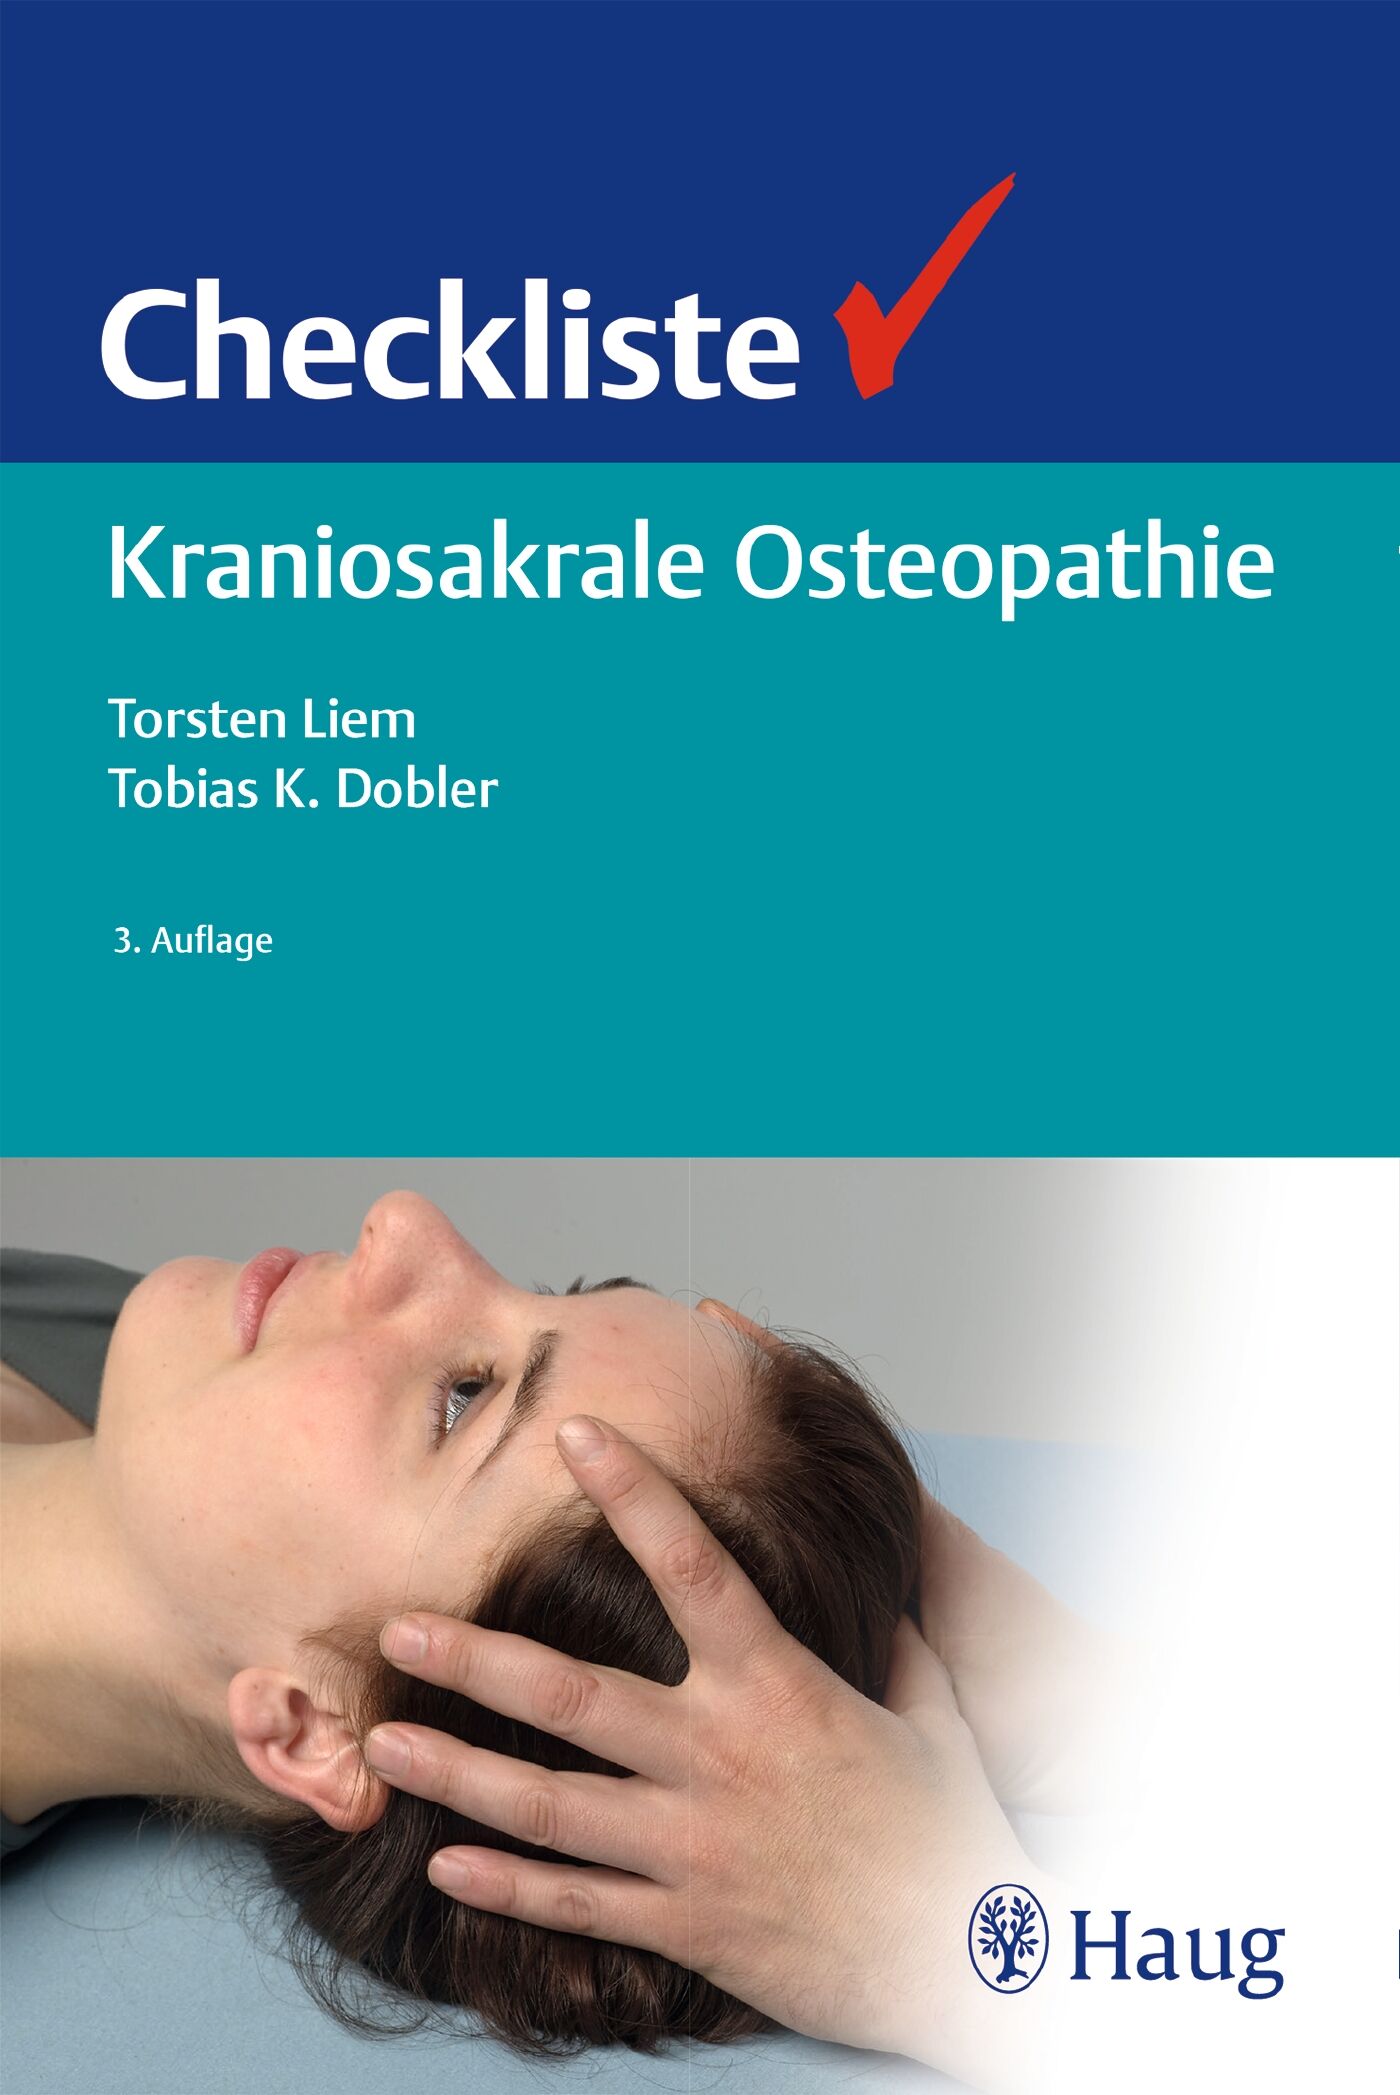 Checkliste Kraniosakrale Osteopathie, 9783132421318